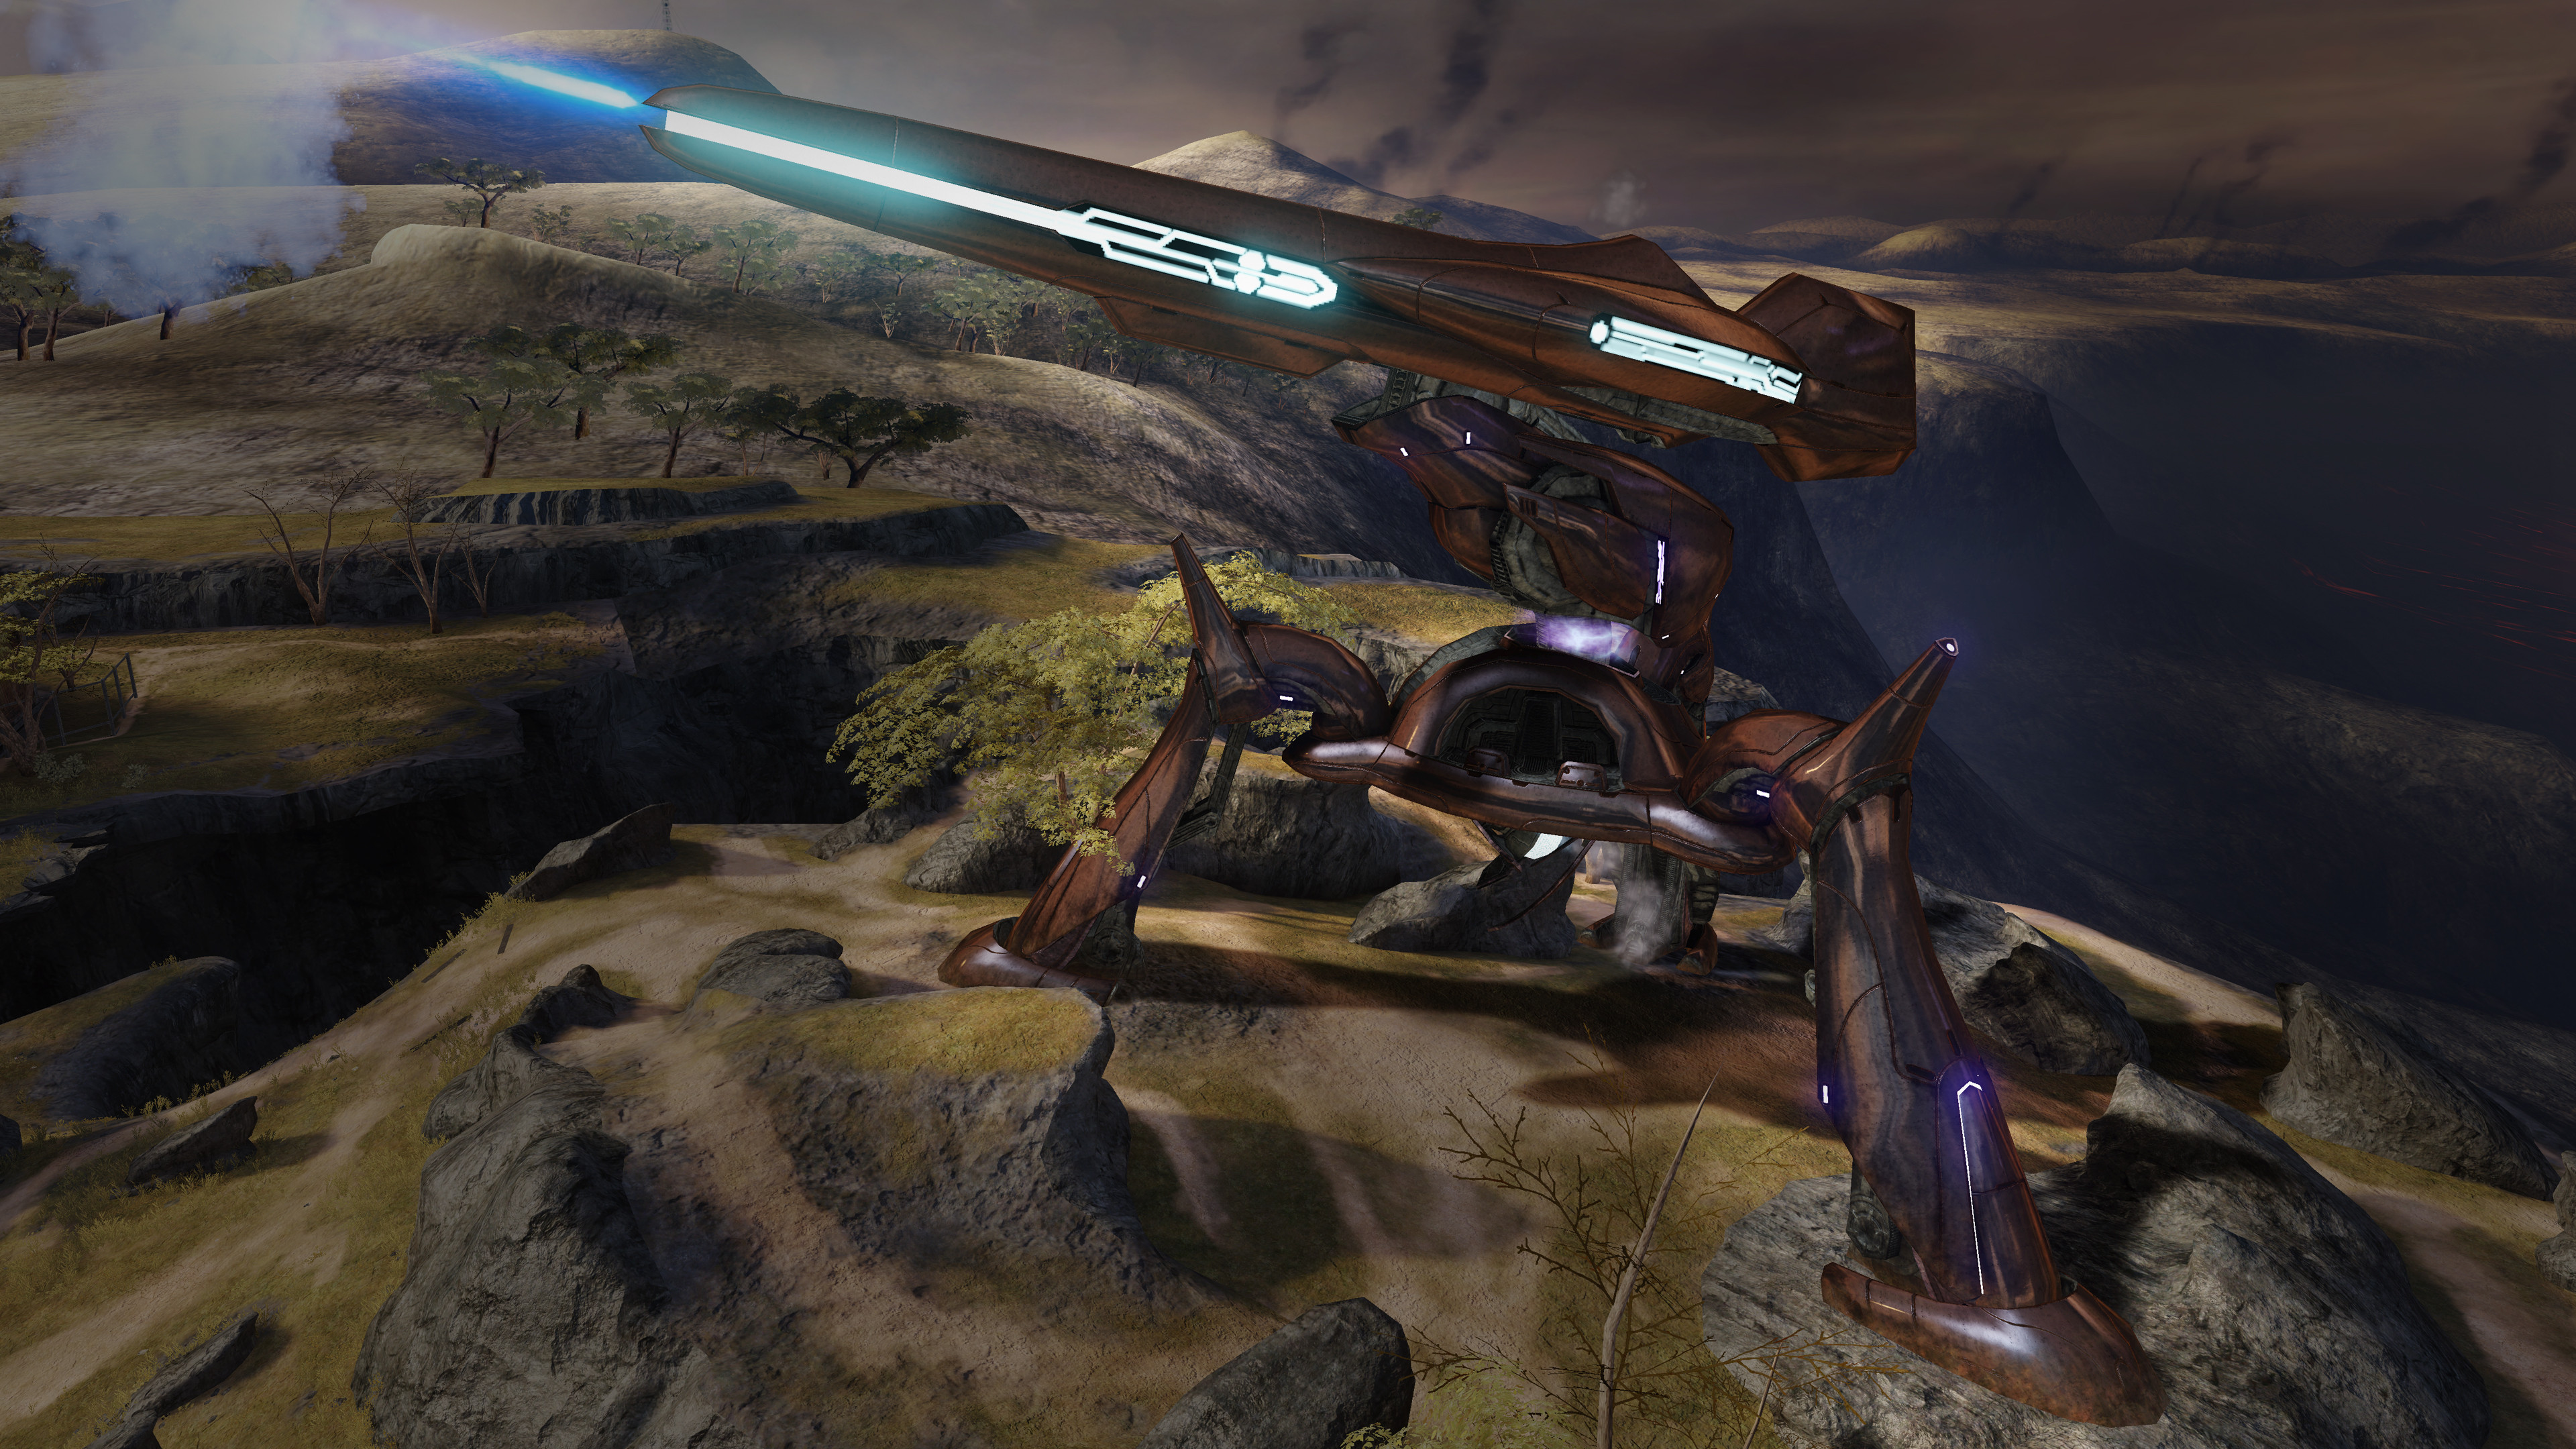 Halo 3 - Covenant BFG post redesign